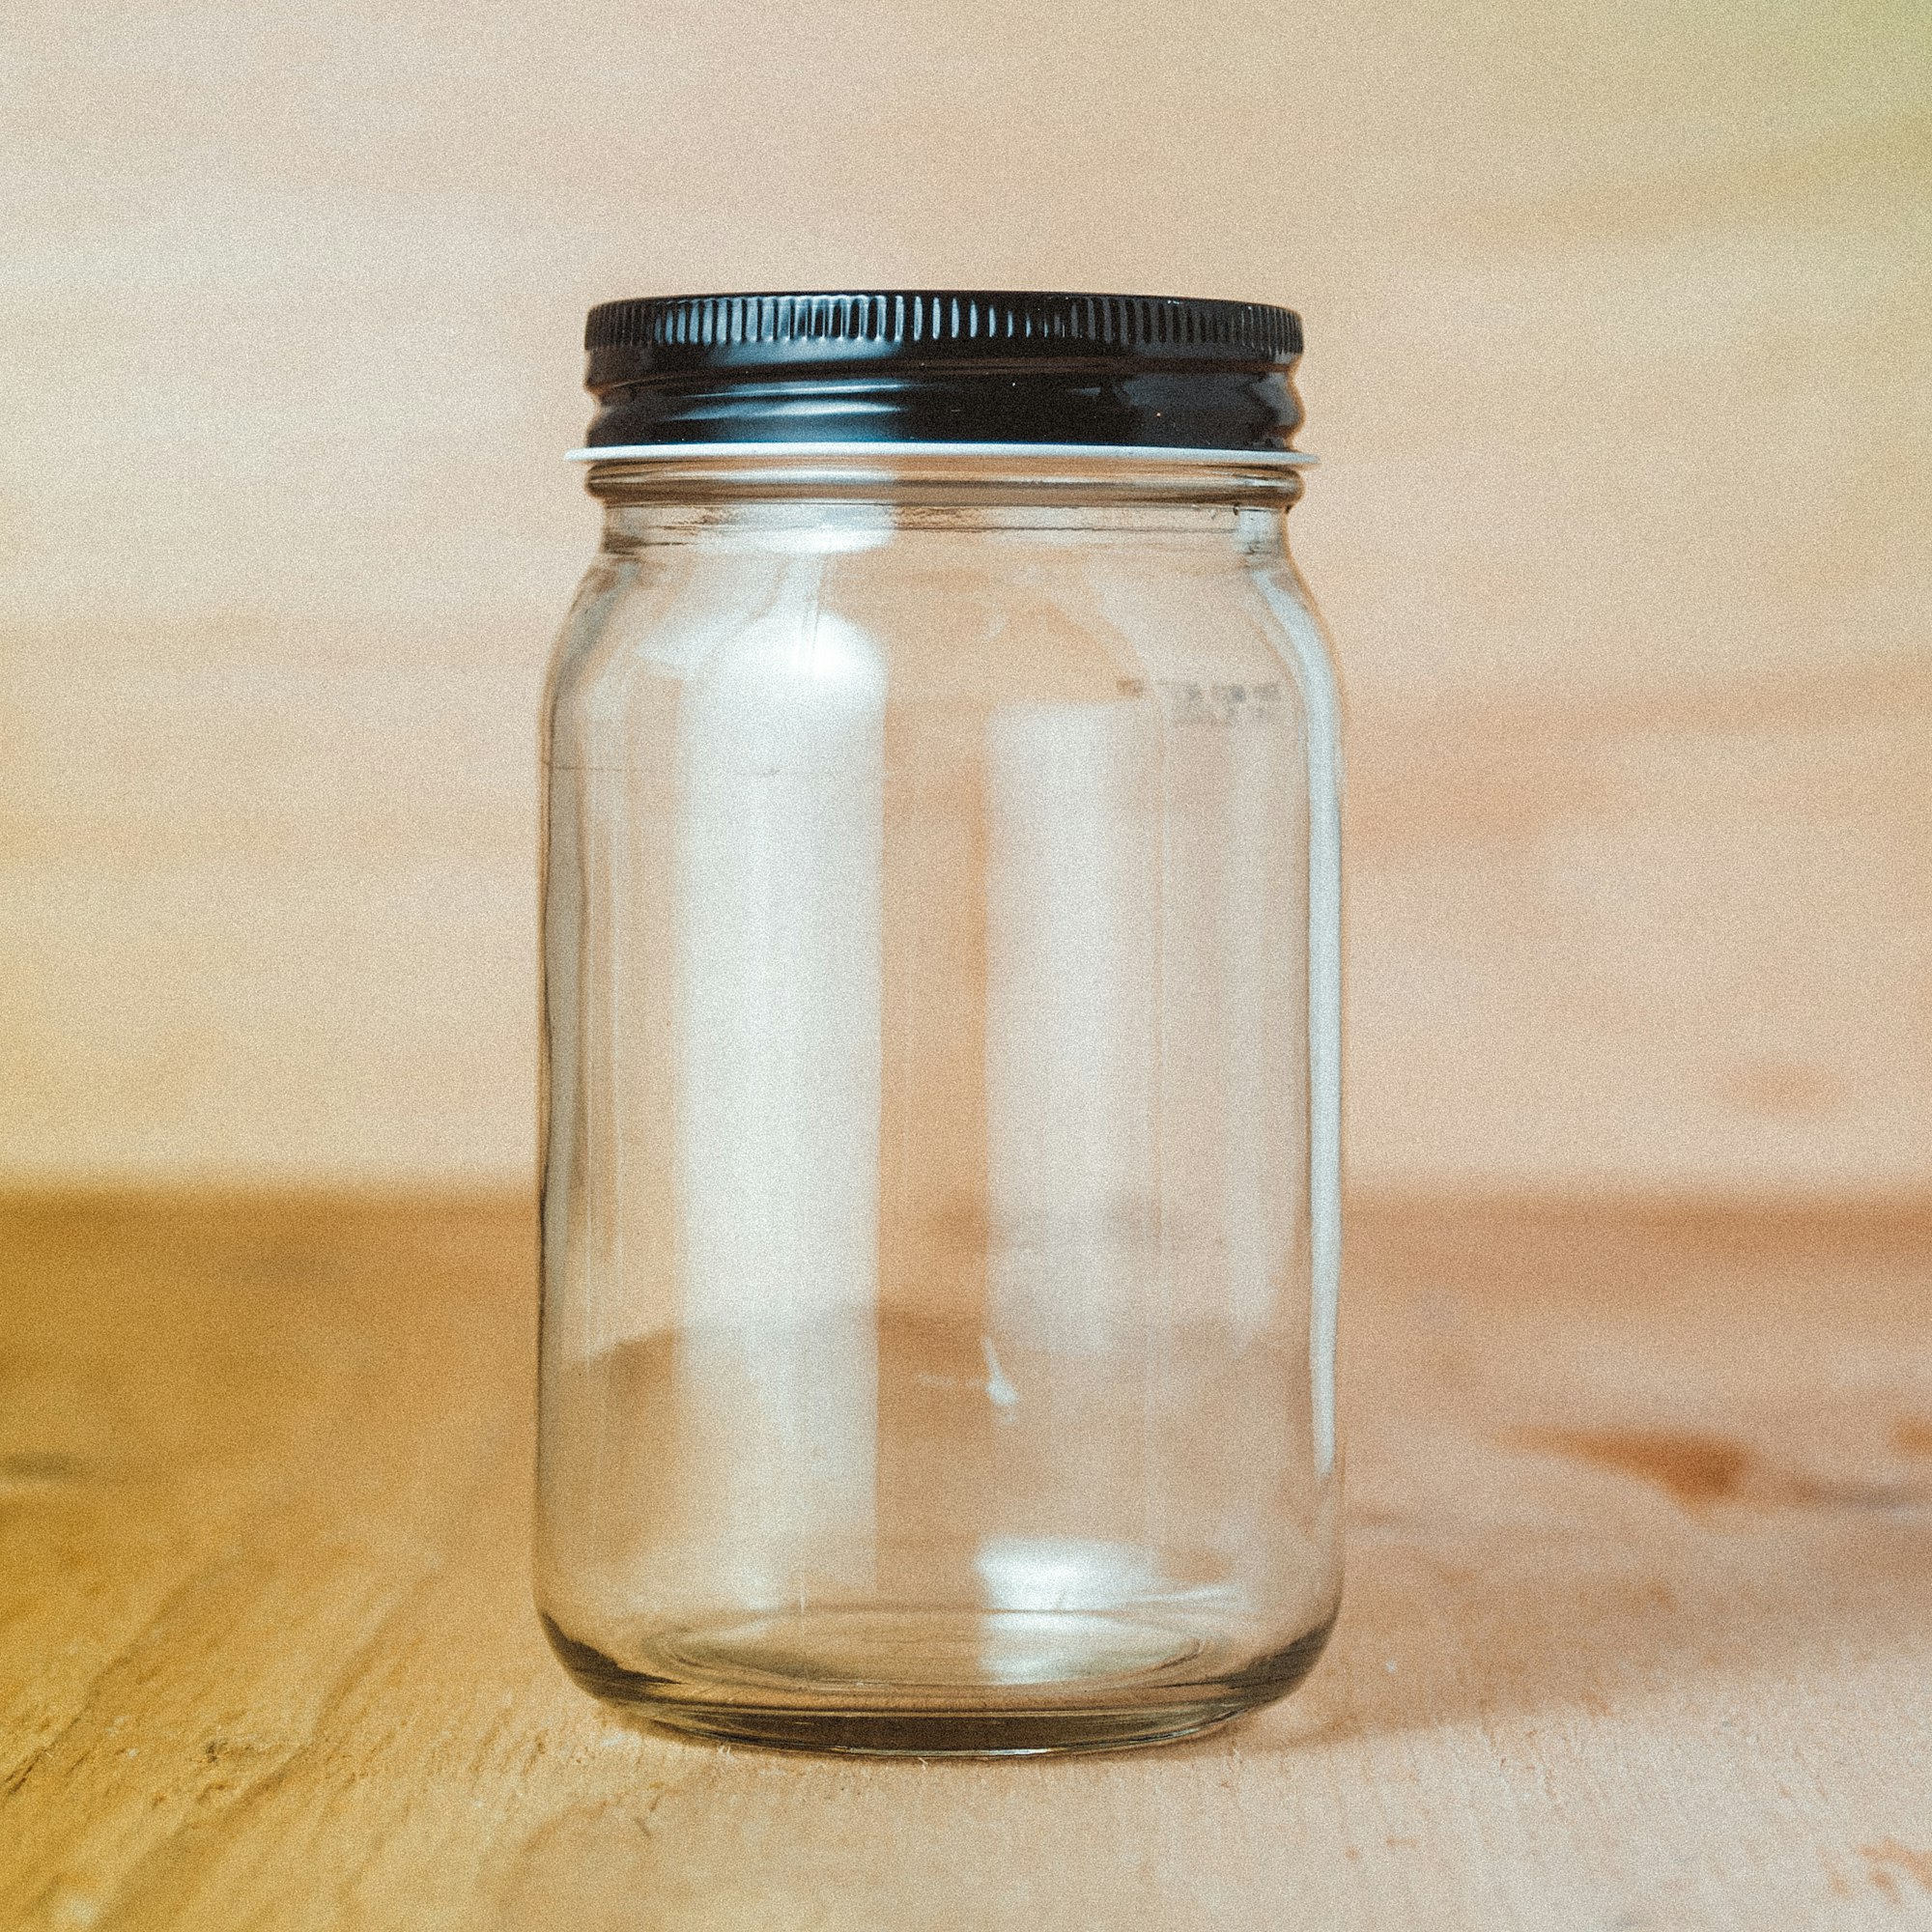 Transparent jar with lid.